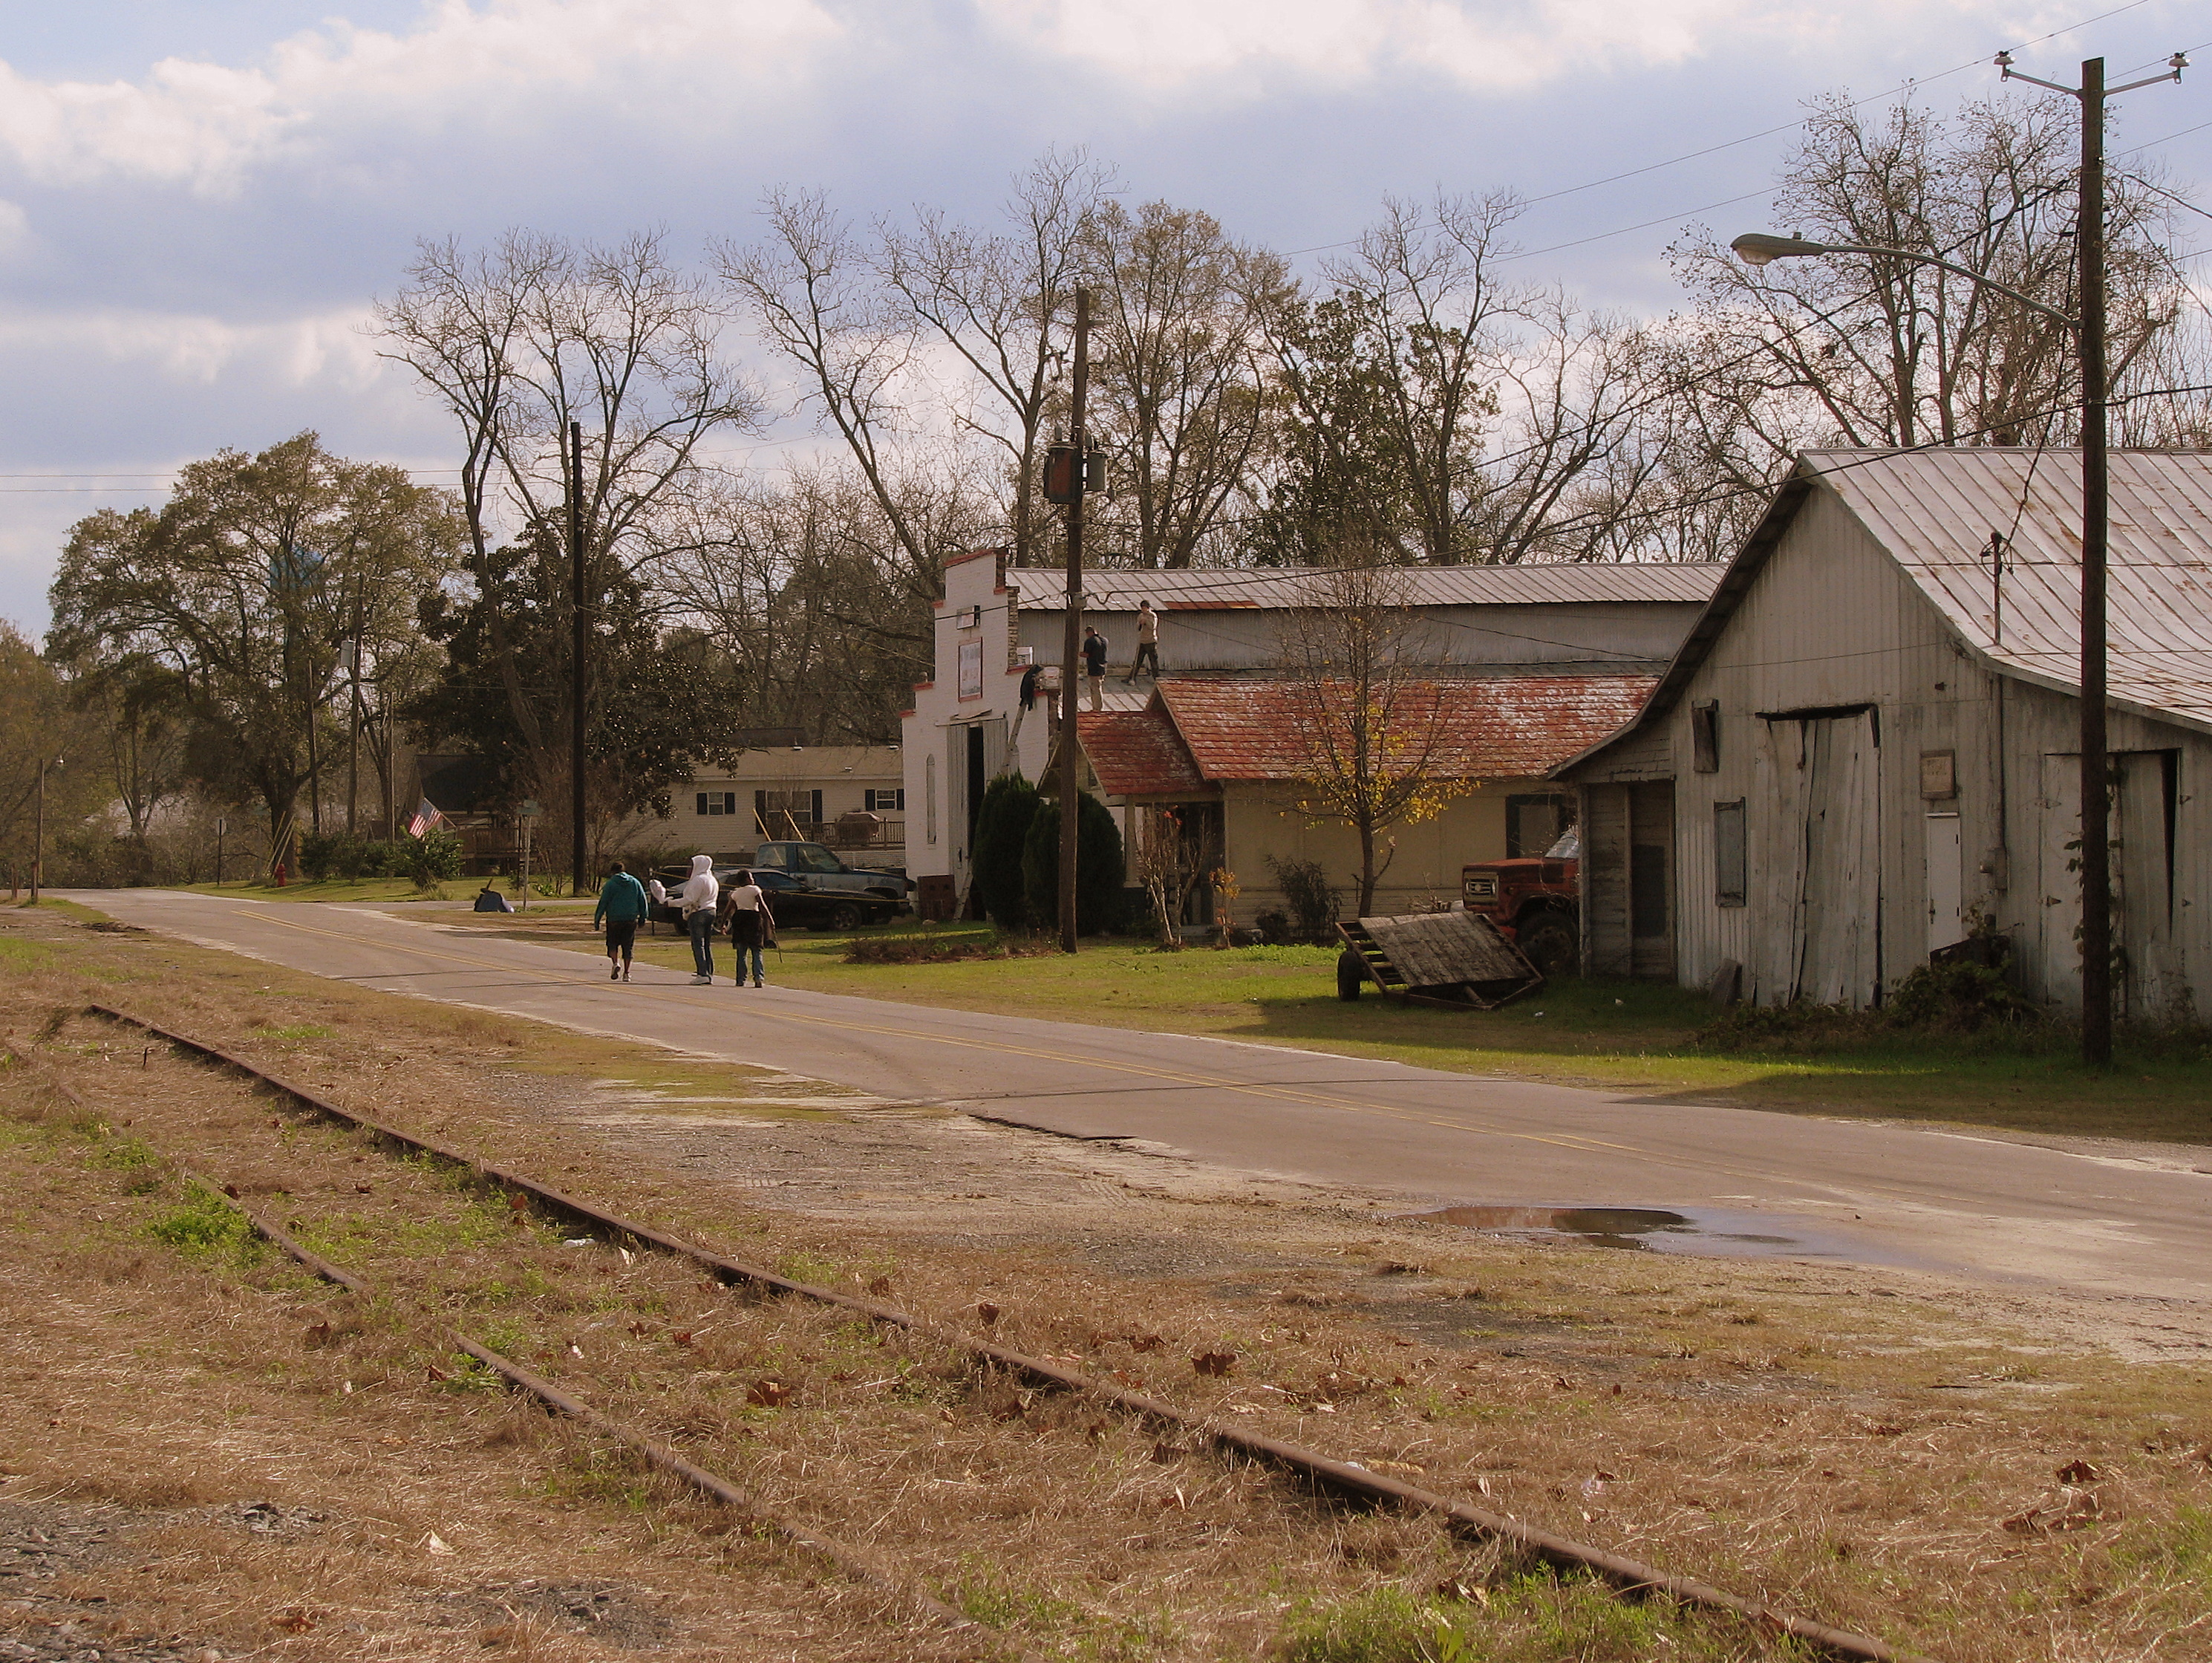 https://vanishingsouthgeorgia.files.wordpress.com/2009/12/sycamore-ga-turner-county-small-town-life-kids-walking-by-railroad-track-abandoned-buildings-americana-photo-copyright-brian-brown-vanishing-south-georgia.jpg